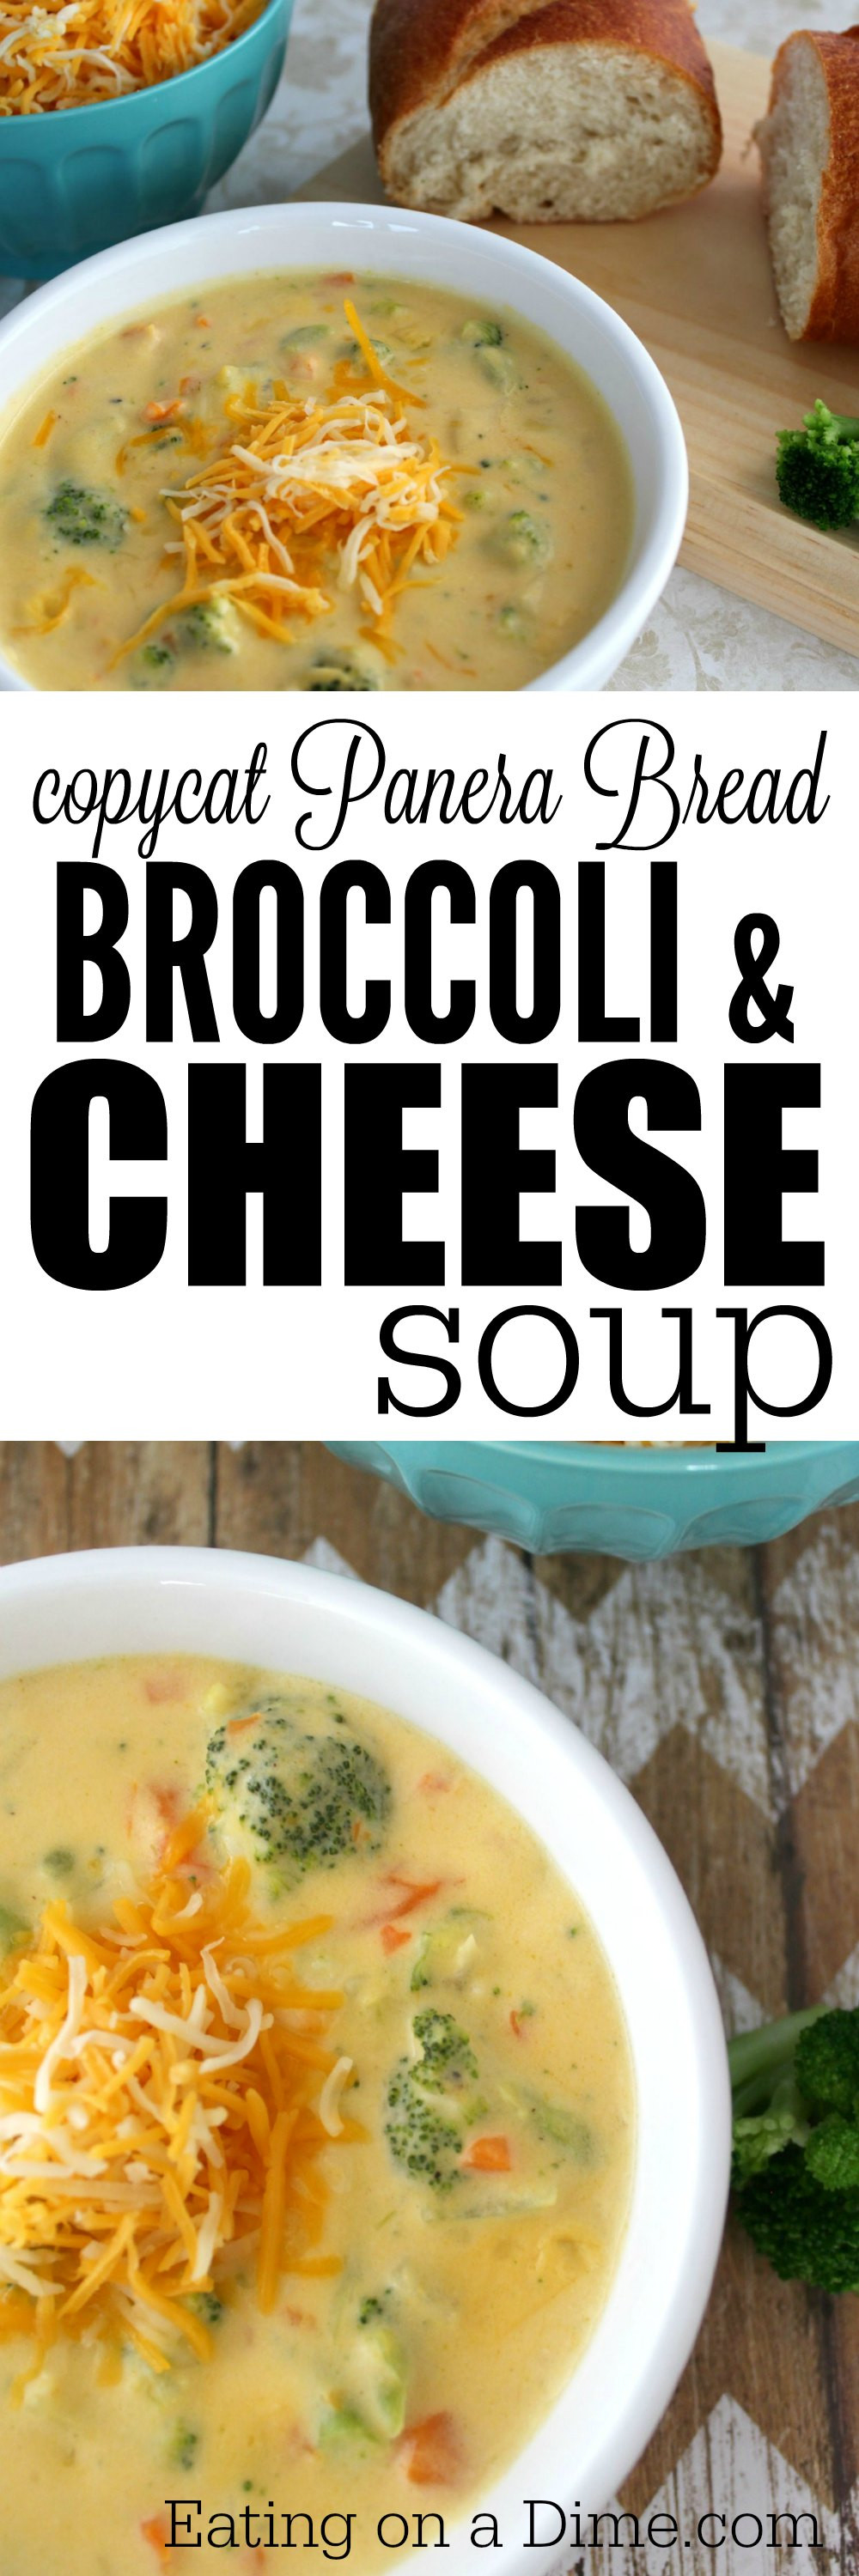 Recipe For Broccoli Cheese Soup
 CopyCat Panera recipe Broccoli and Cheese Soup Eating on